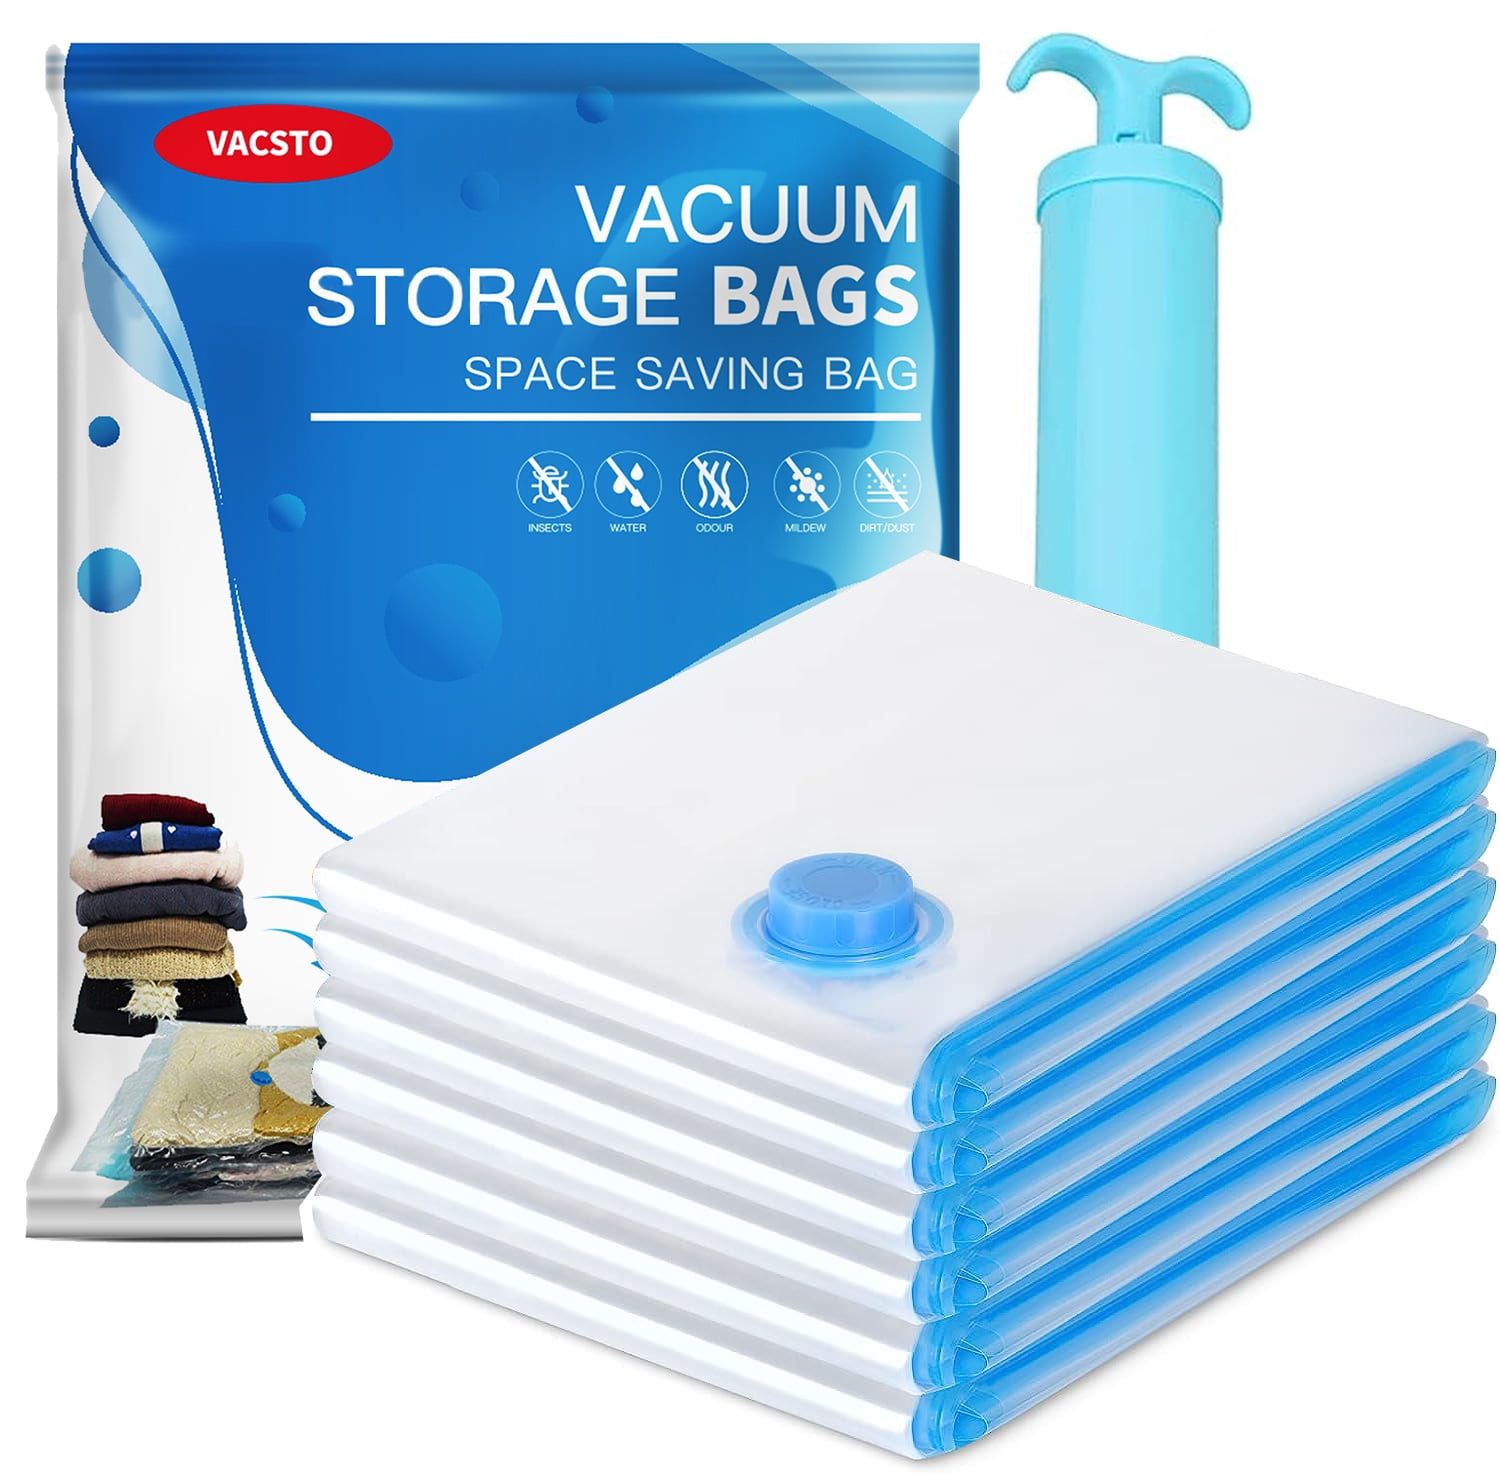 VELMADE Vacuum Storage Bags Jumbo Cube 6 Pack, Space Saver Bags Extra Large Vacuum Seal Bags for Comforters Blankets Clothes (3 Jumbo 3 Medium), Closet